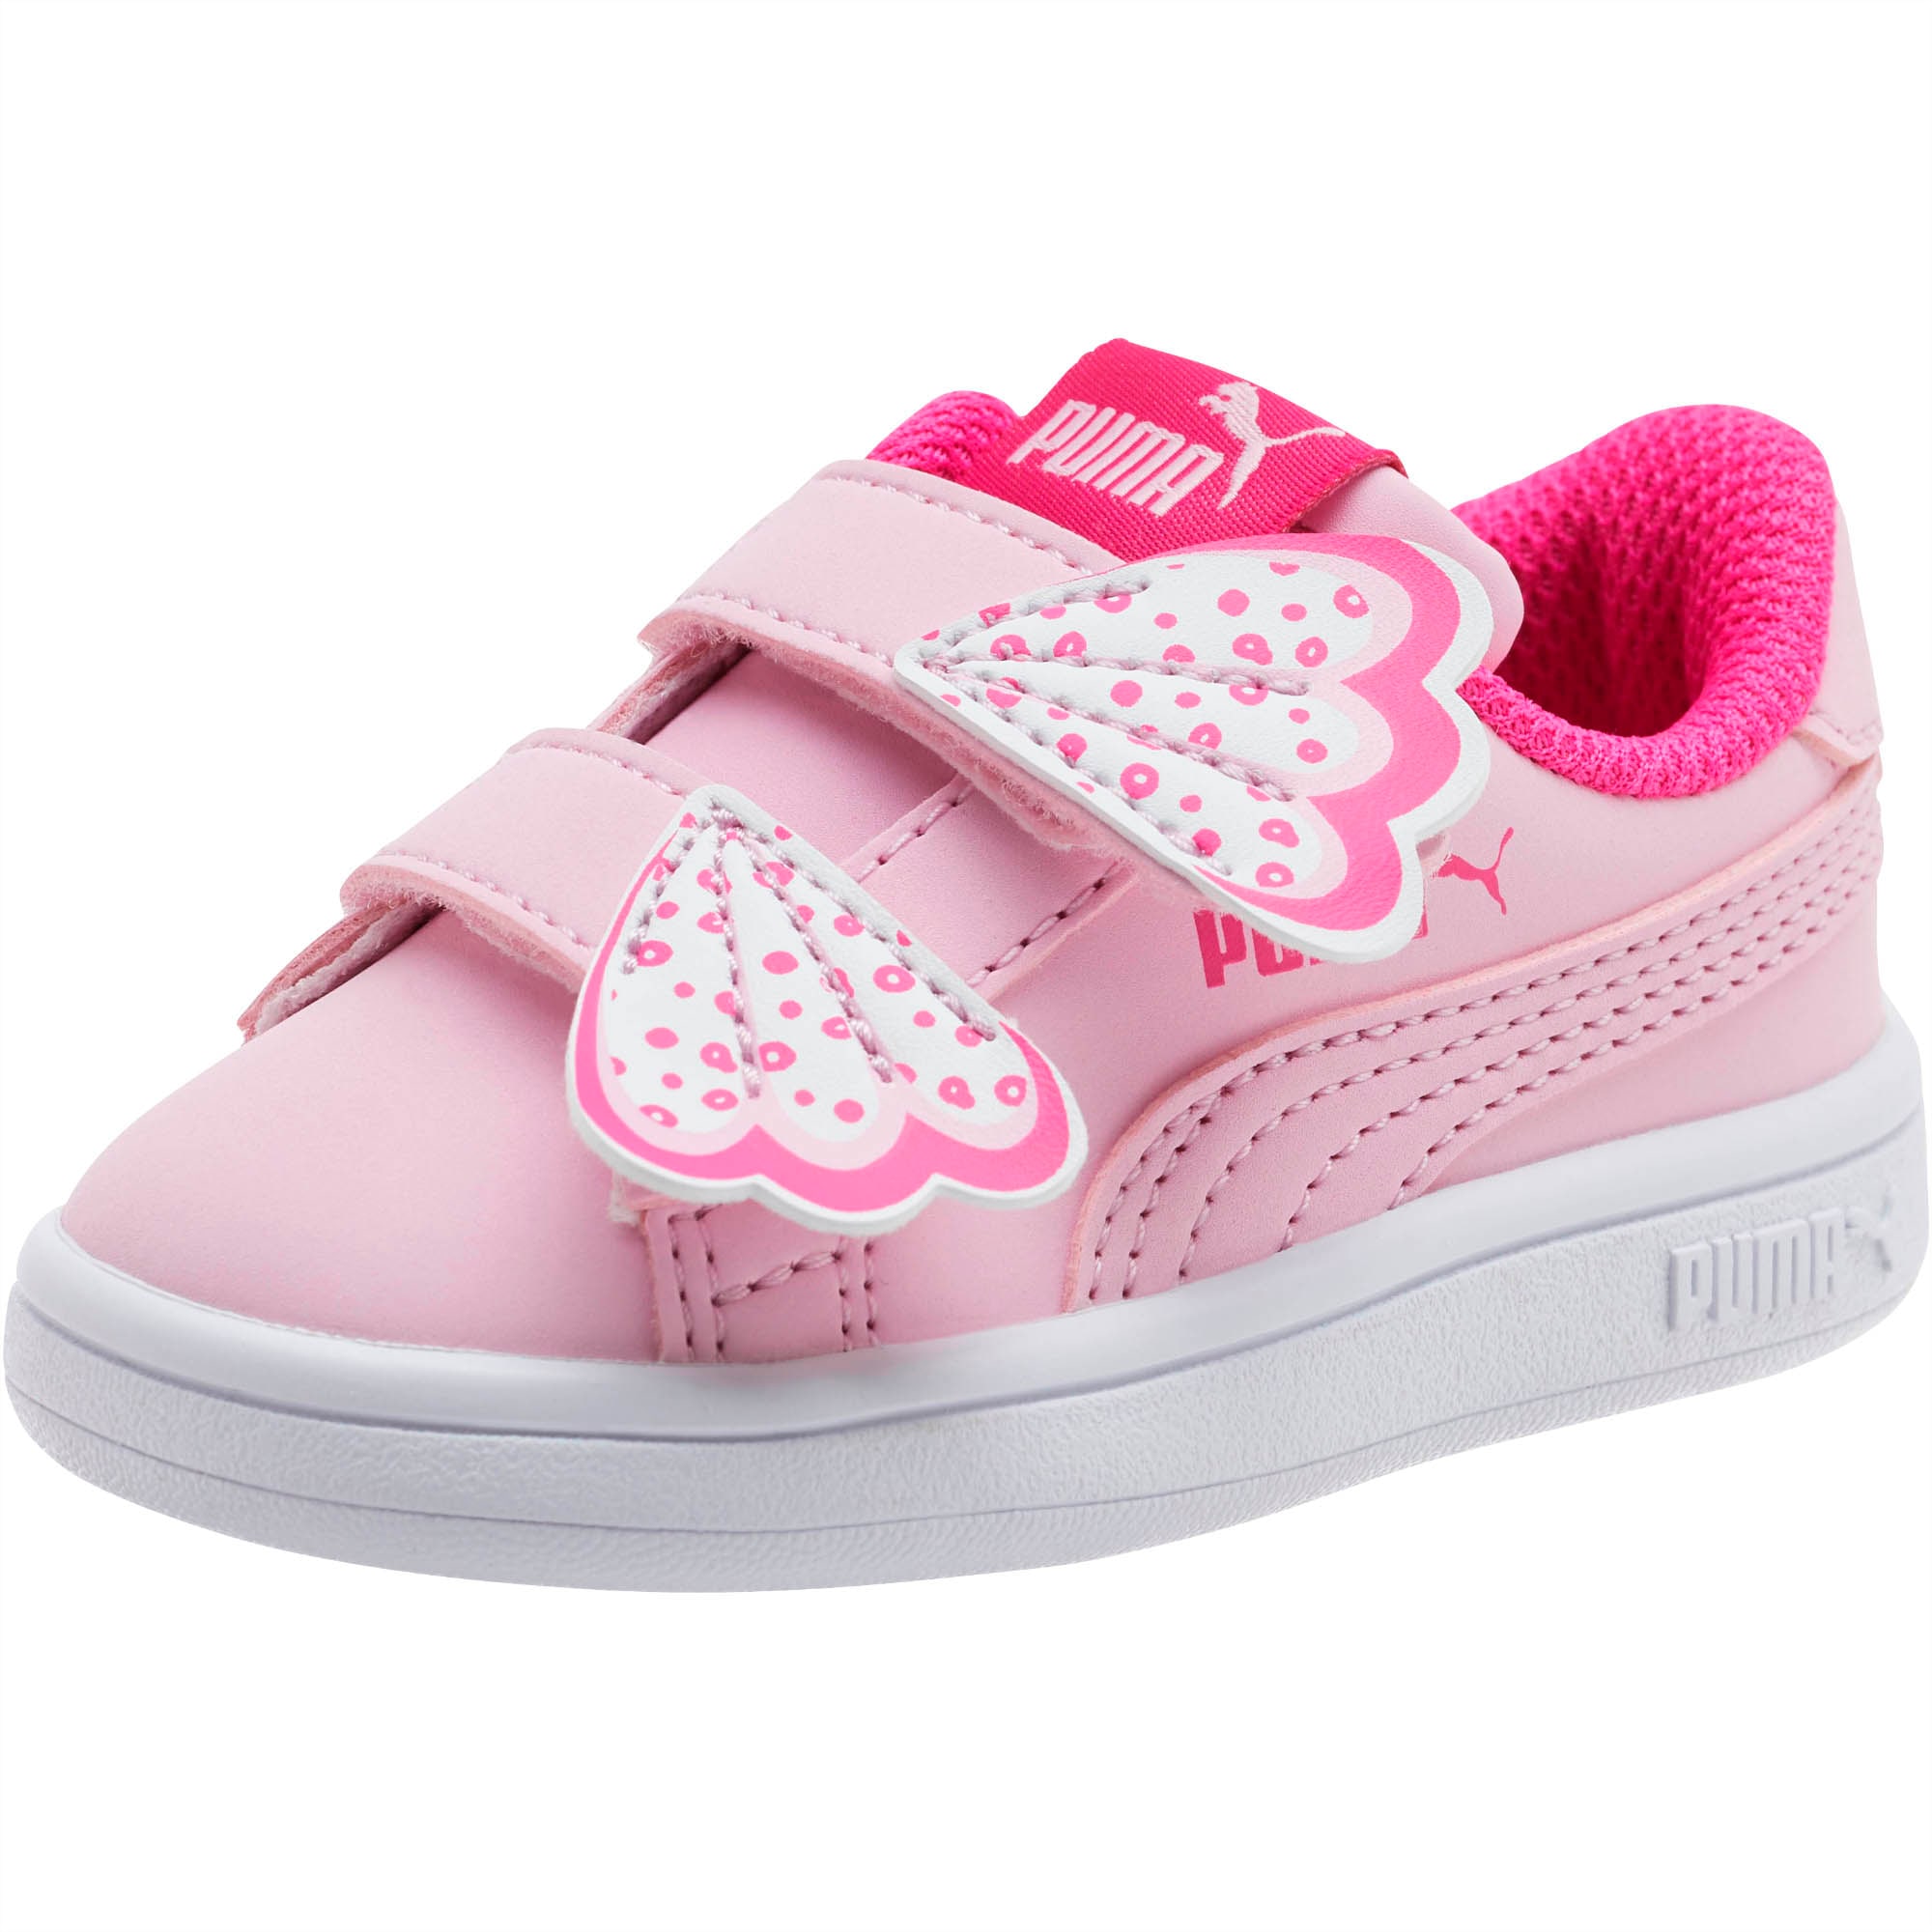 PUMA Smash v2 Butterfly AC Toddler Shoes | PUMA US